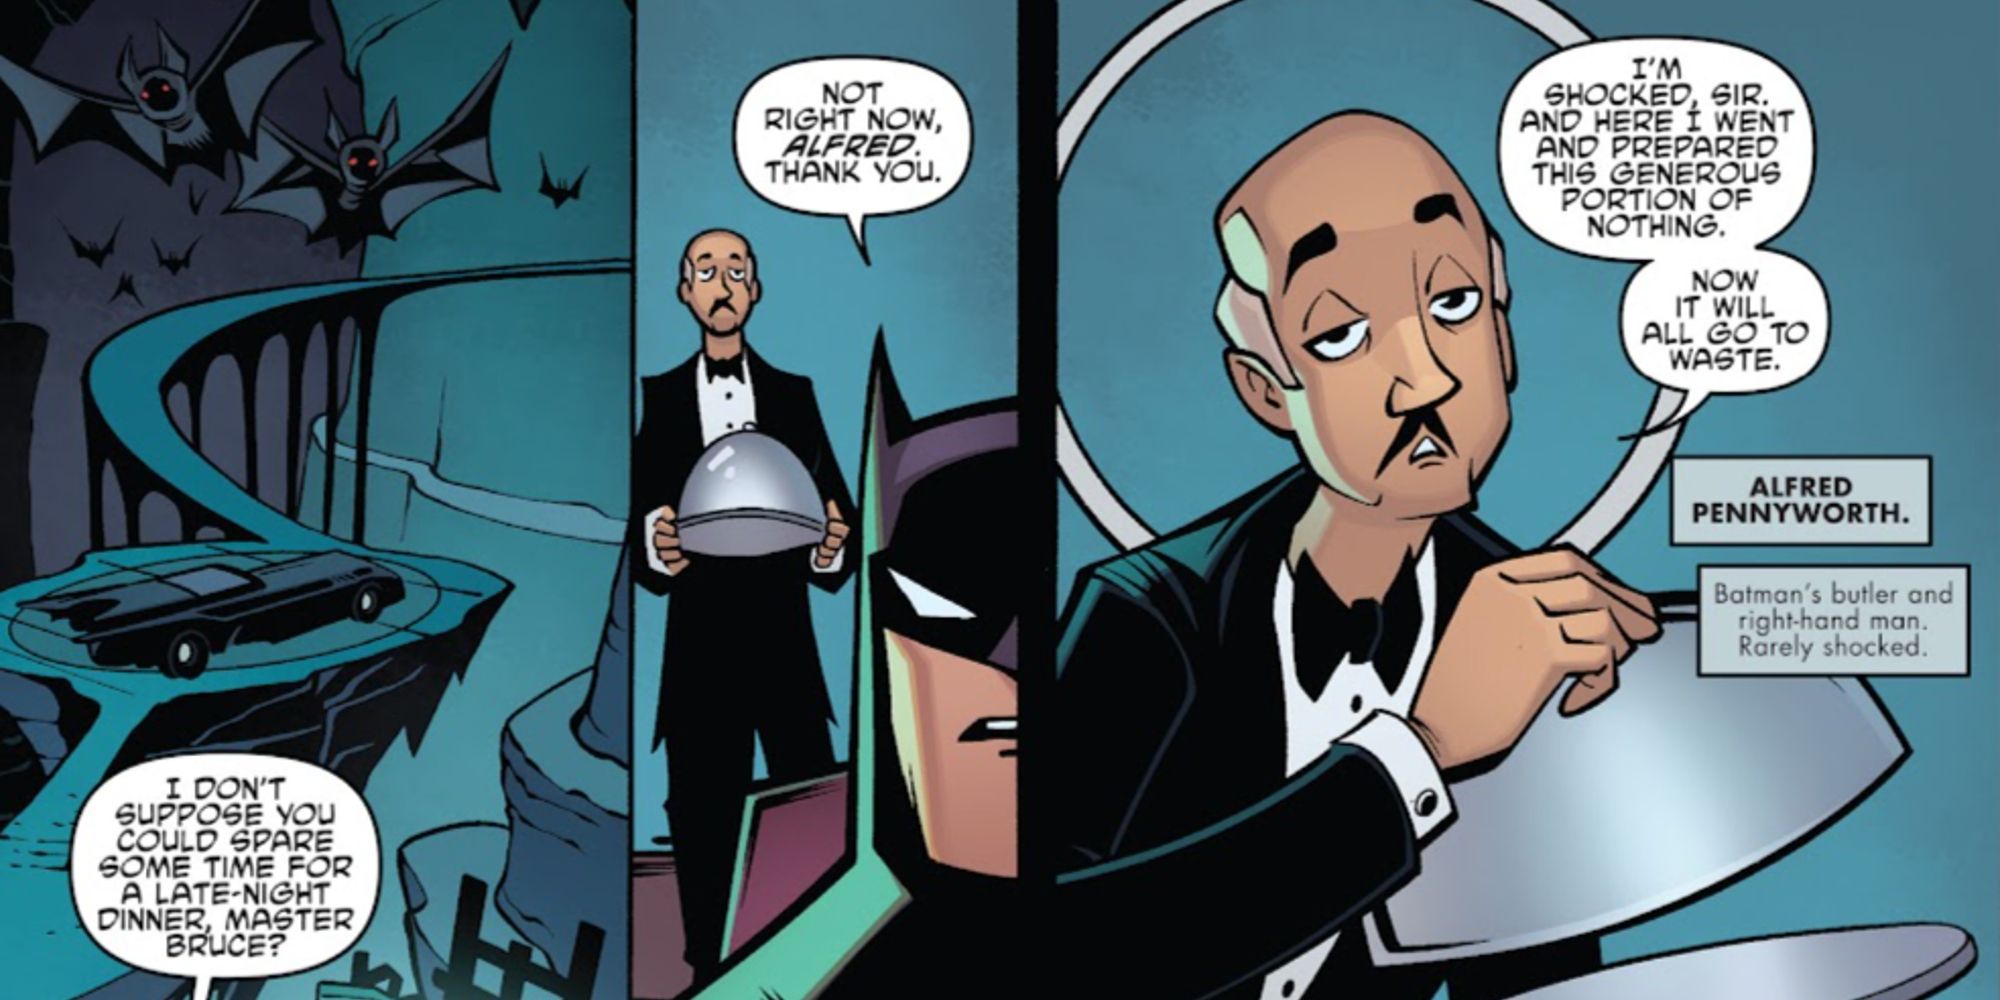 Alfred zombando de Batman com um prato vazio em Batman/Teenage Mutant Ninja Turtles Adventures #1